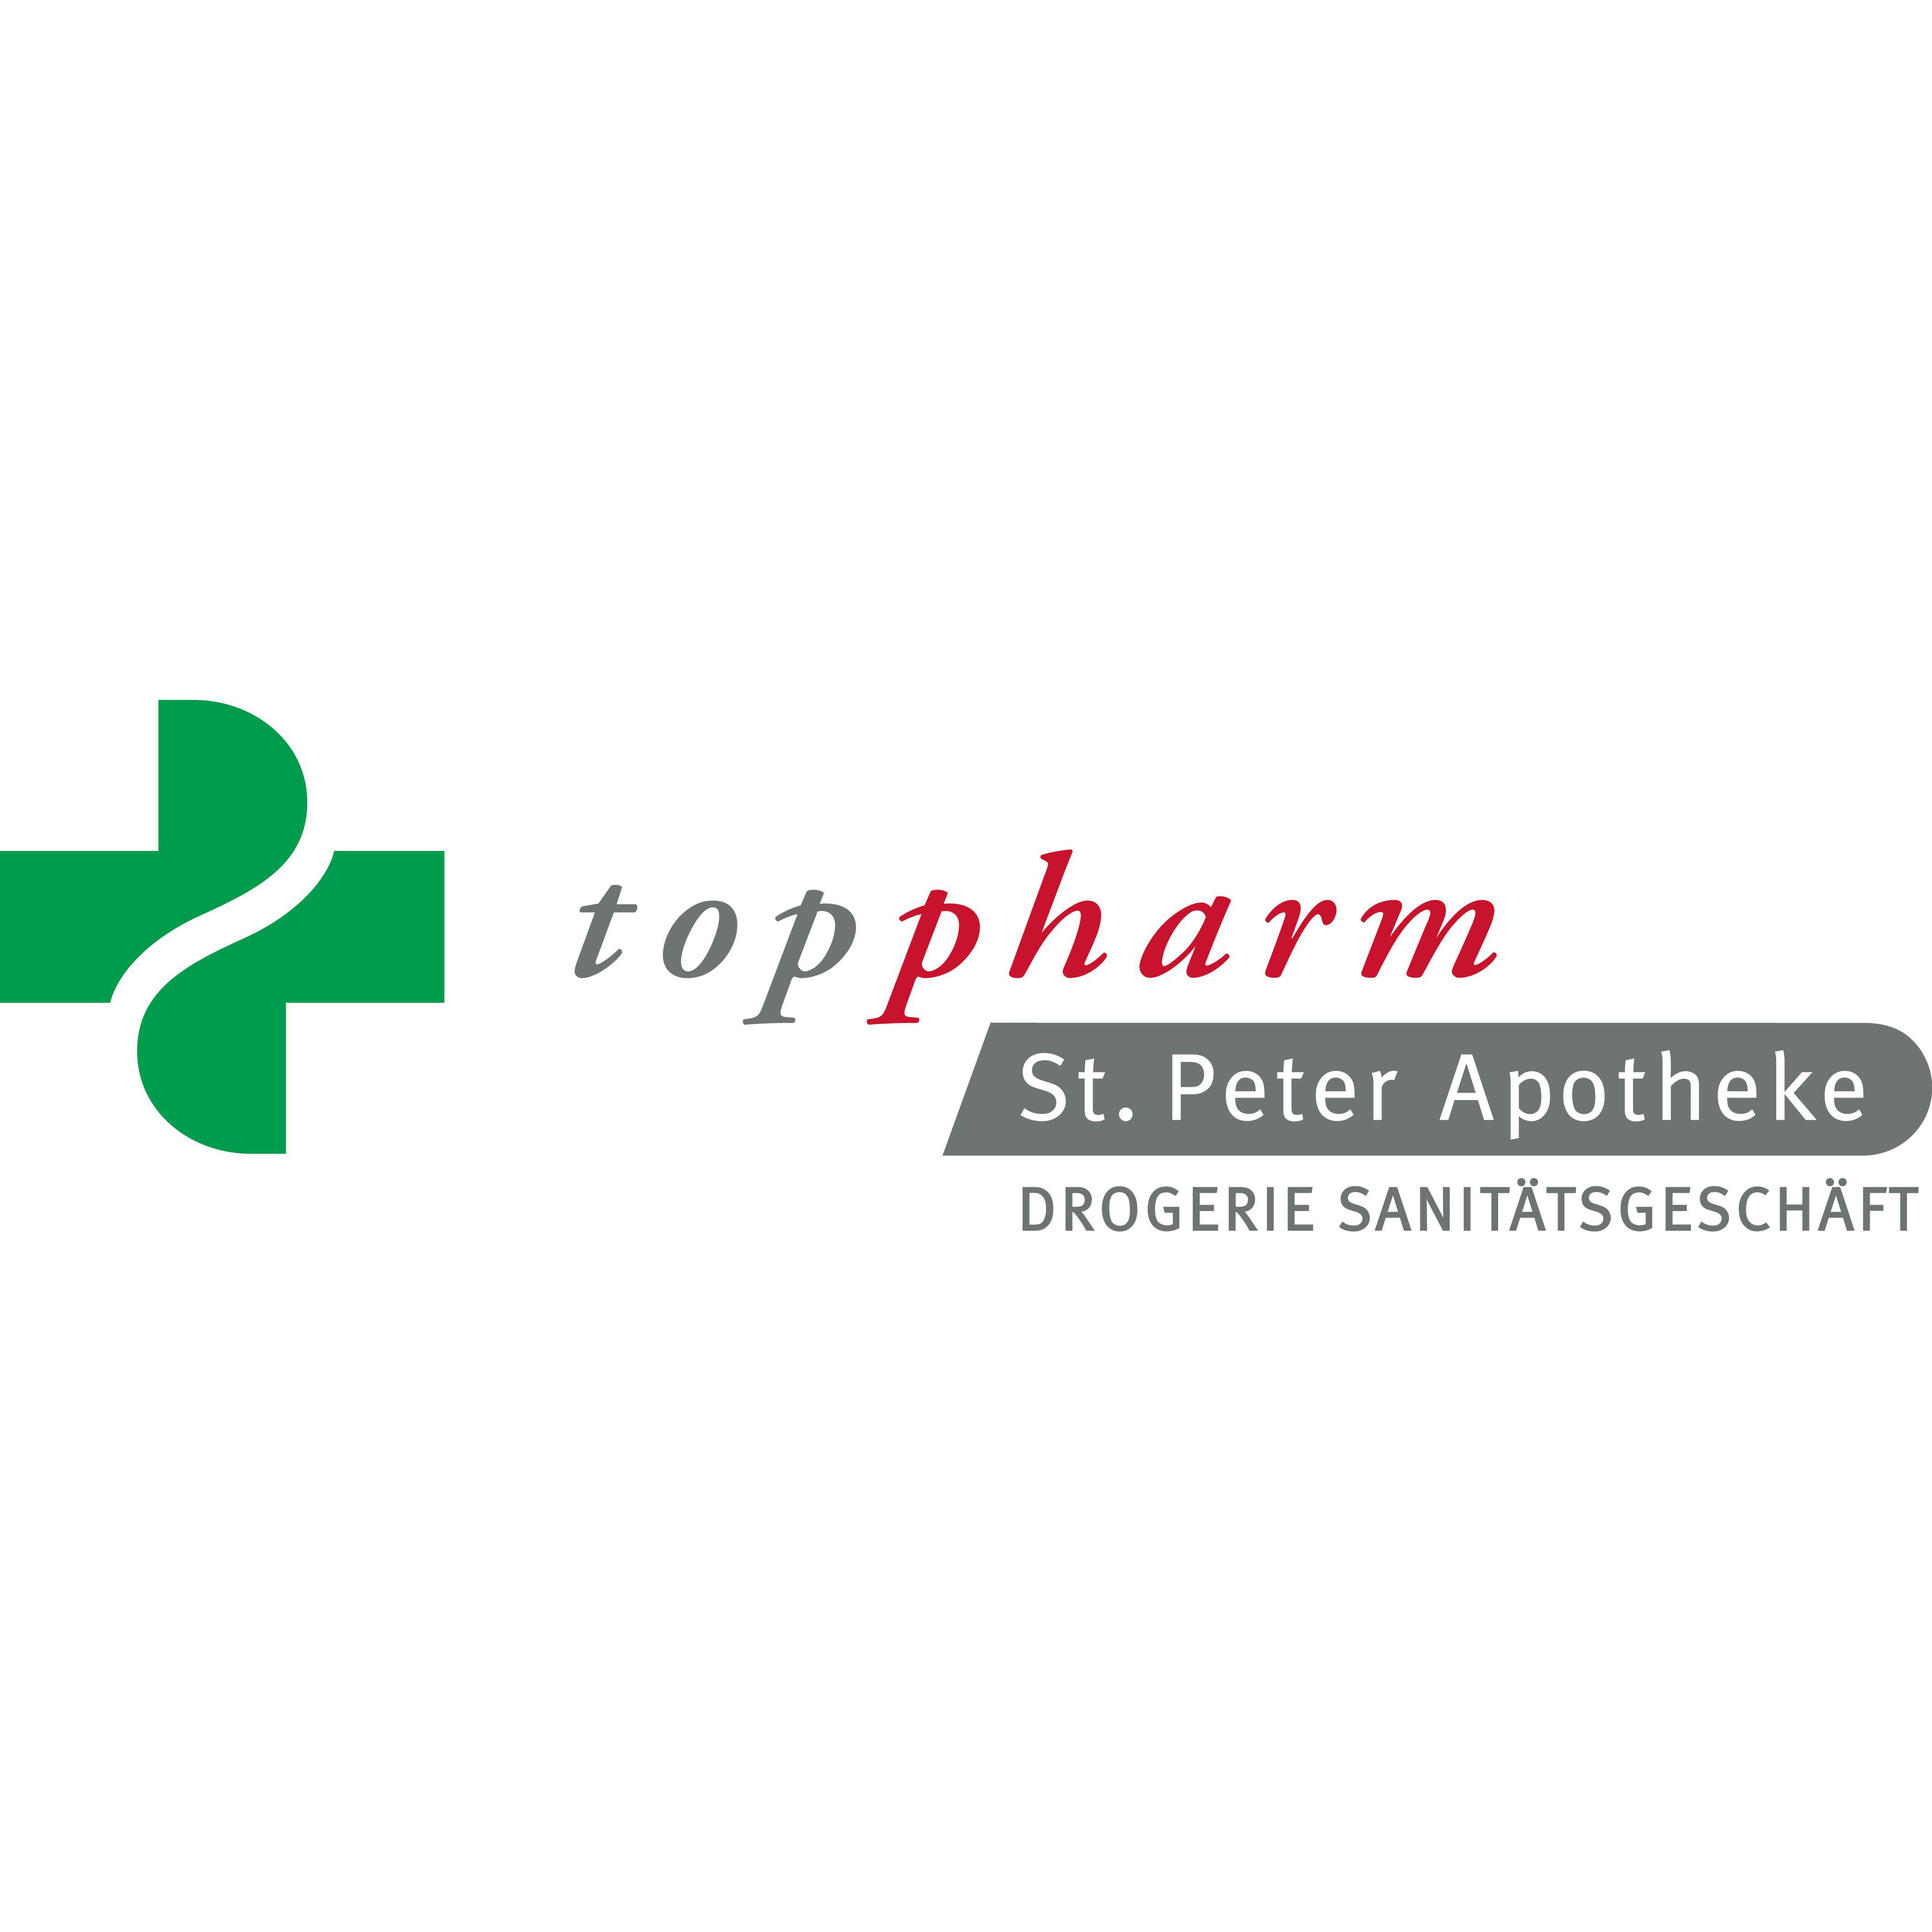 Toppharm St. Peter Apotheke Drogerie Sanitätsgeschäft Logo